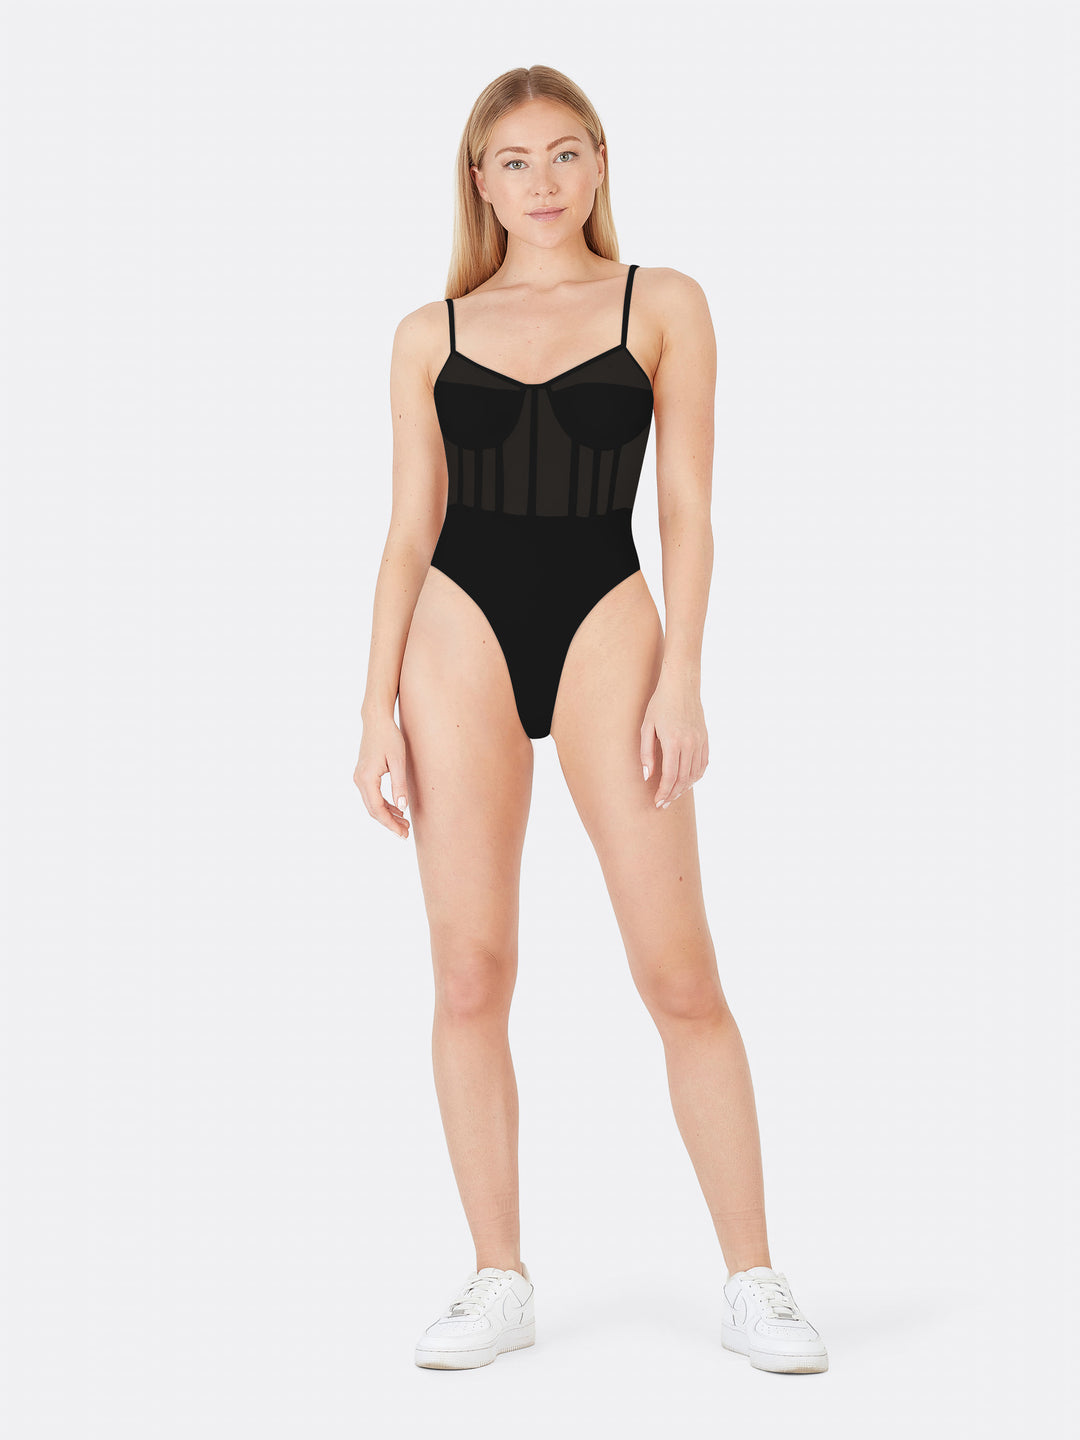 Transparent Bodysuit with Sweetheart Neckline Adjustable Thin Straps Black Front | Jolovies